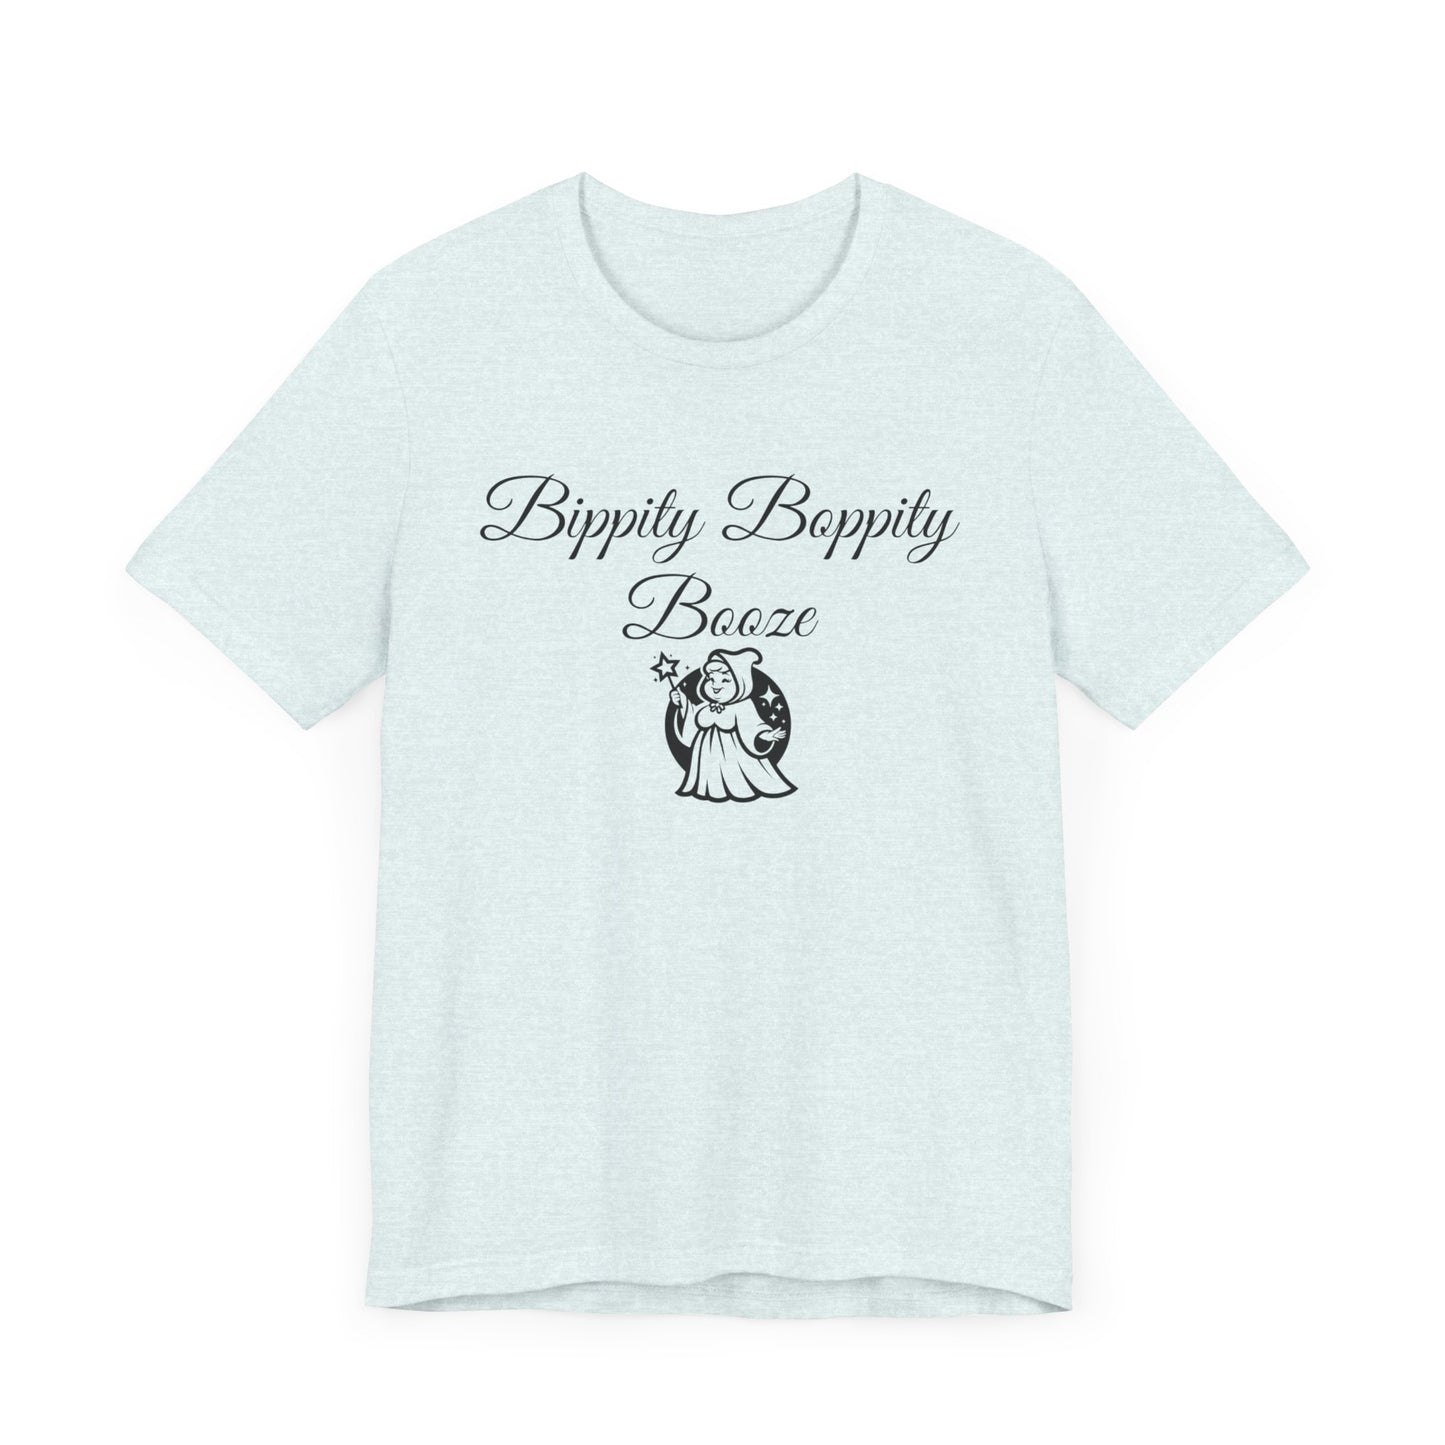 Bippity Boppity BoozeShort Sleeve Tee